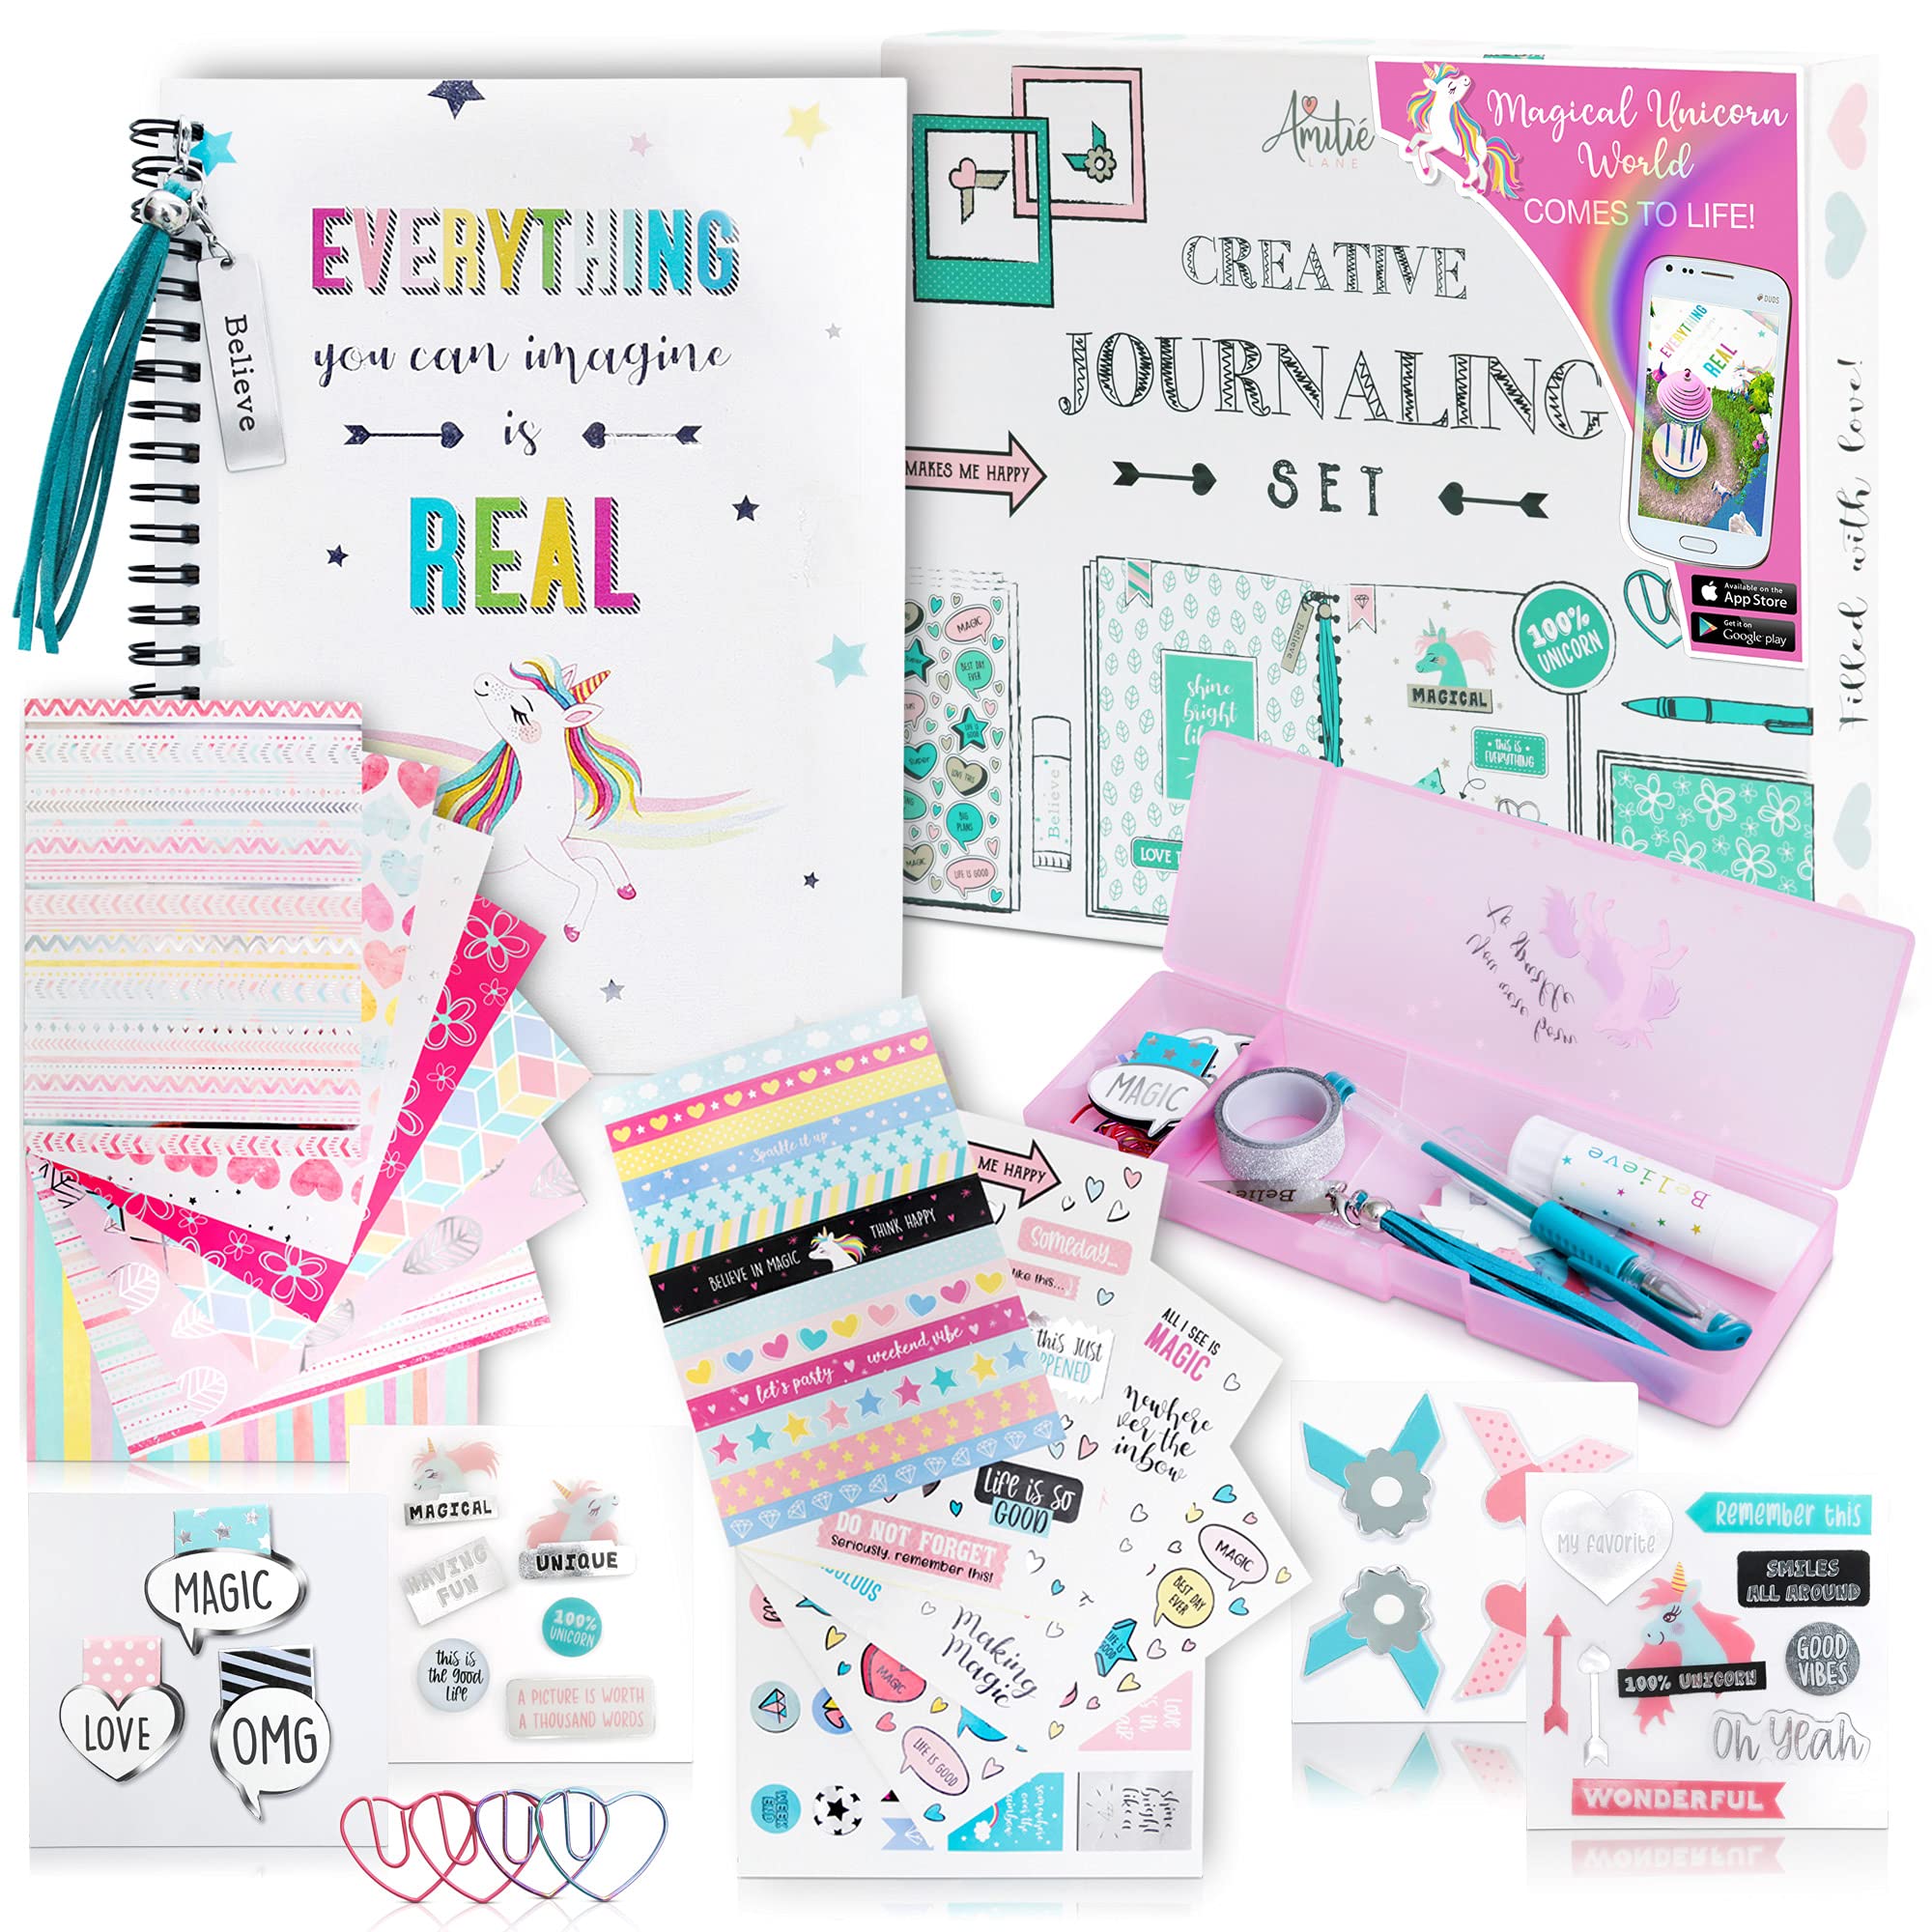  DIY Journal Kit for Girls Ages 8-12 - Girls Scrapbook Kit  Gifts, DIY Journal Kit for Girls to Decorate Scrapbook, Journals for  Writing, Scrapbook Kit Girls Journal Kit Age 10-12 (Pink) 